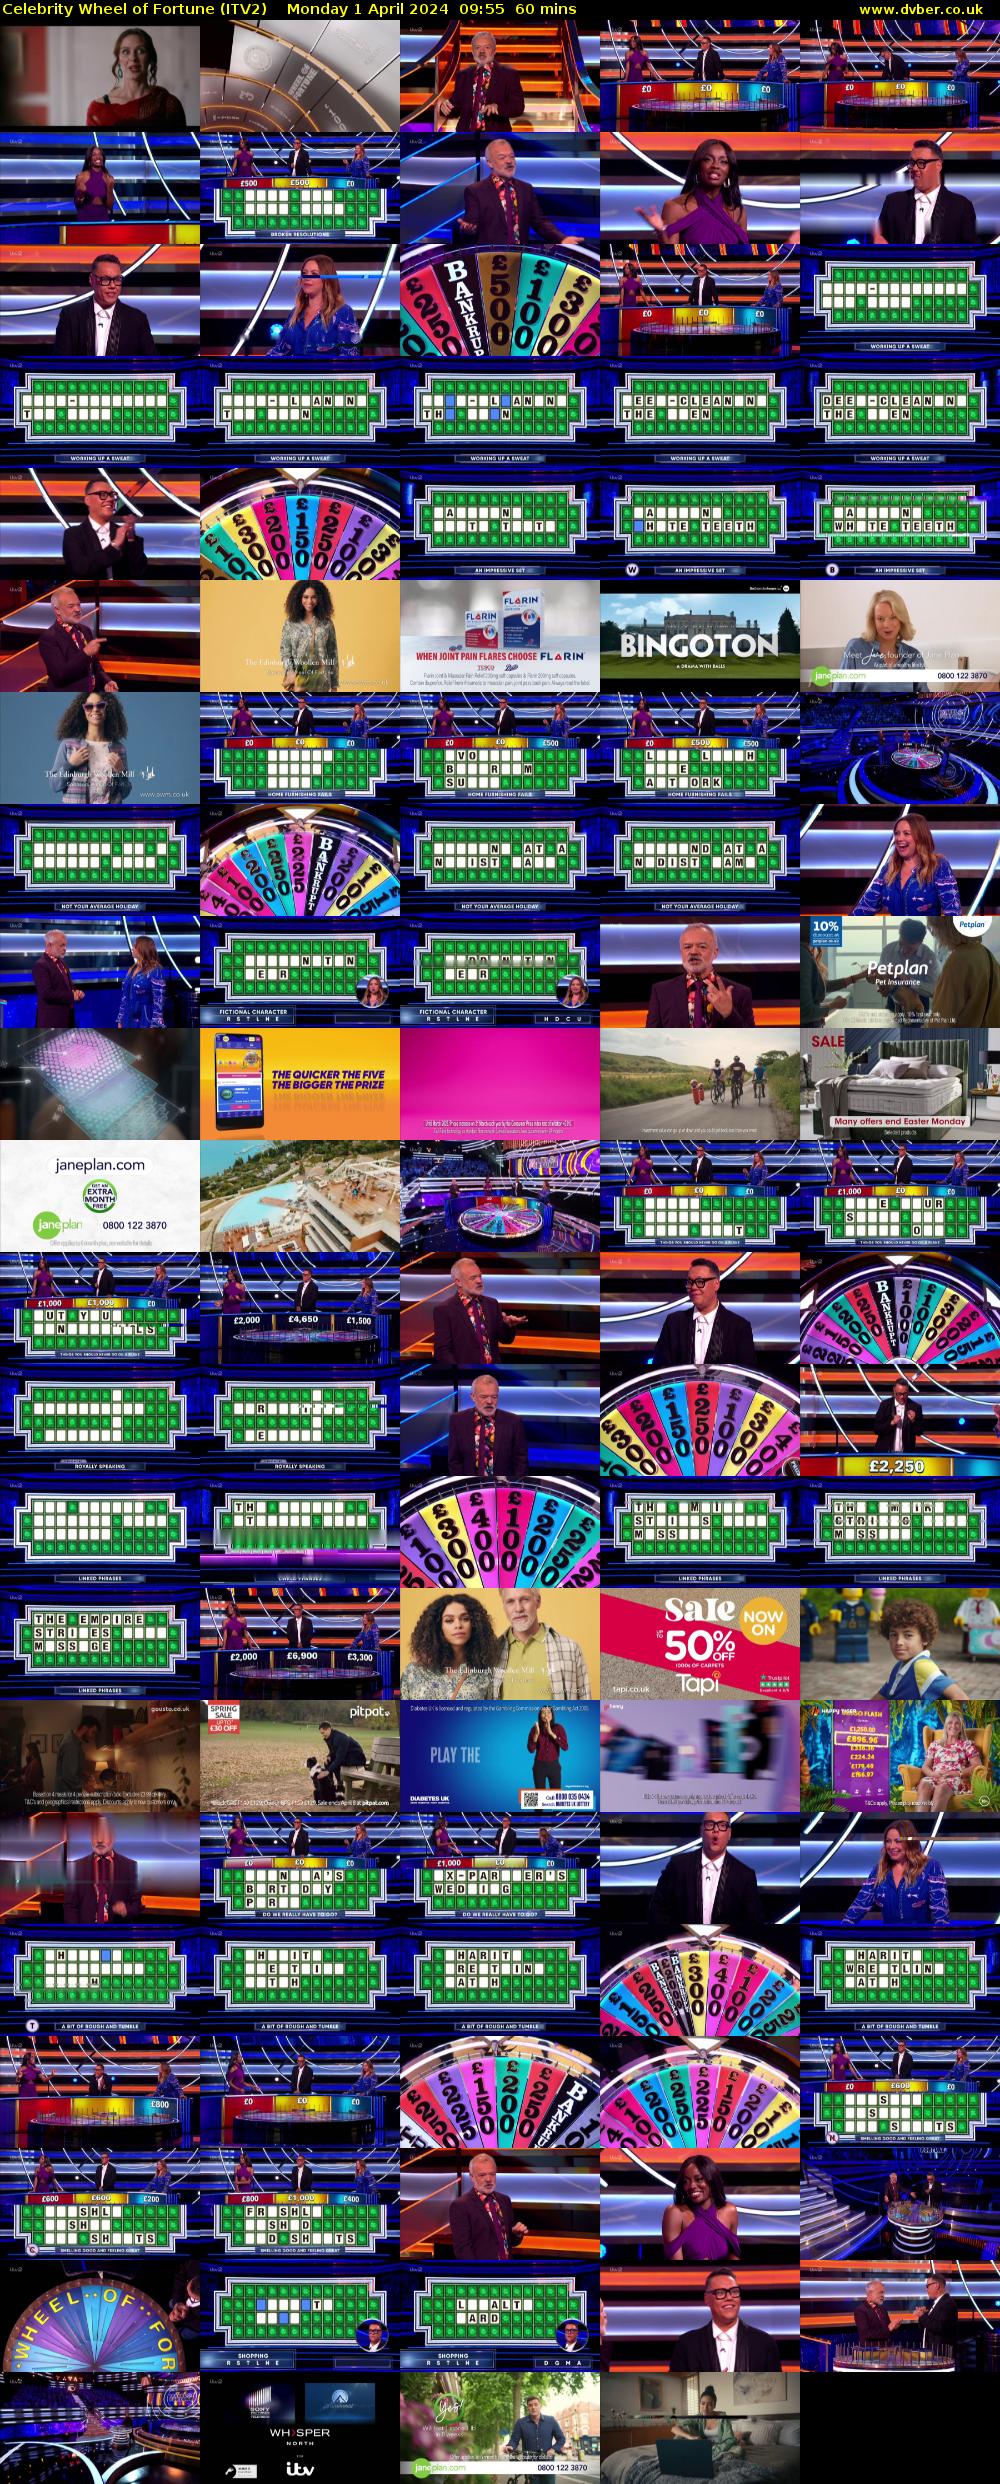 Celebrity Wheel of Fortune (ITV2) Monday 1 April 2024 09:55 - 10:55